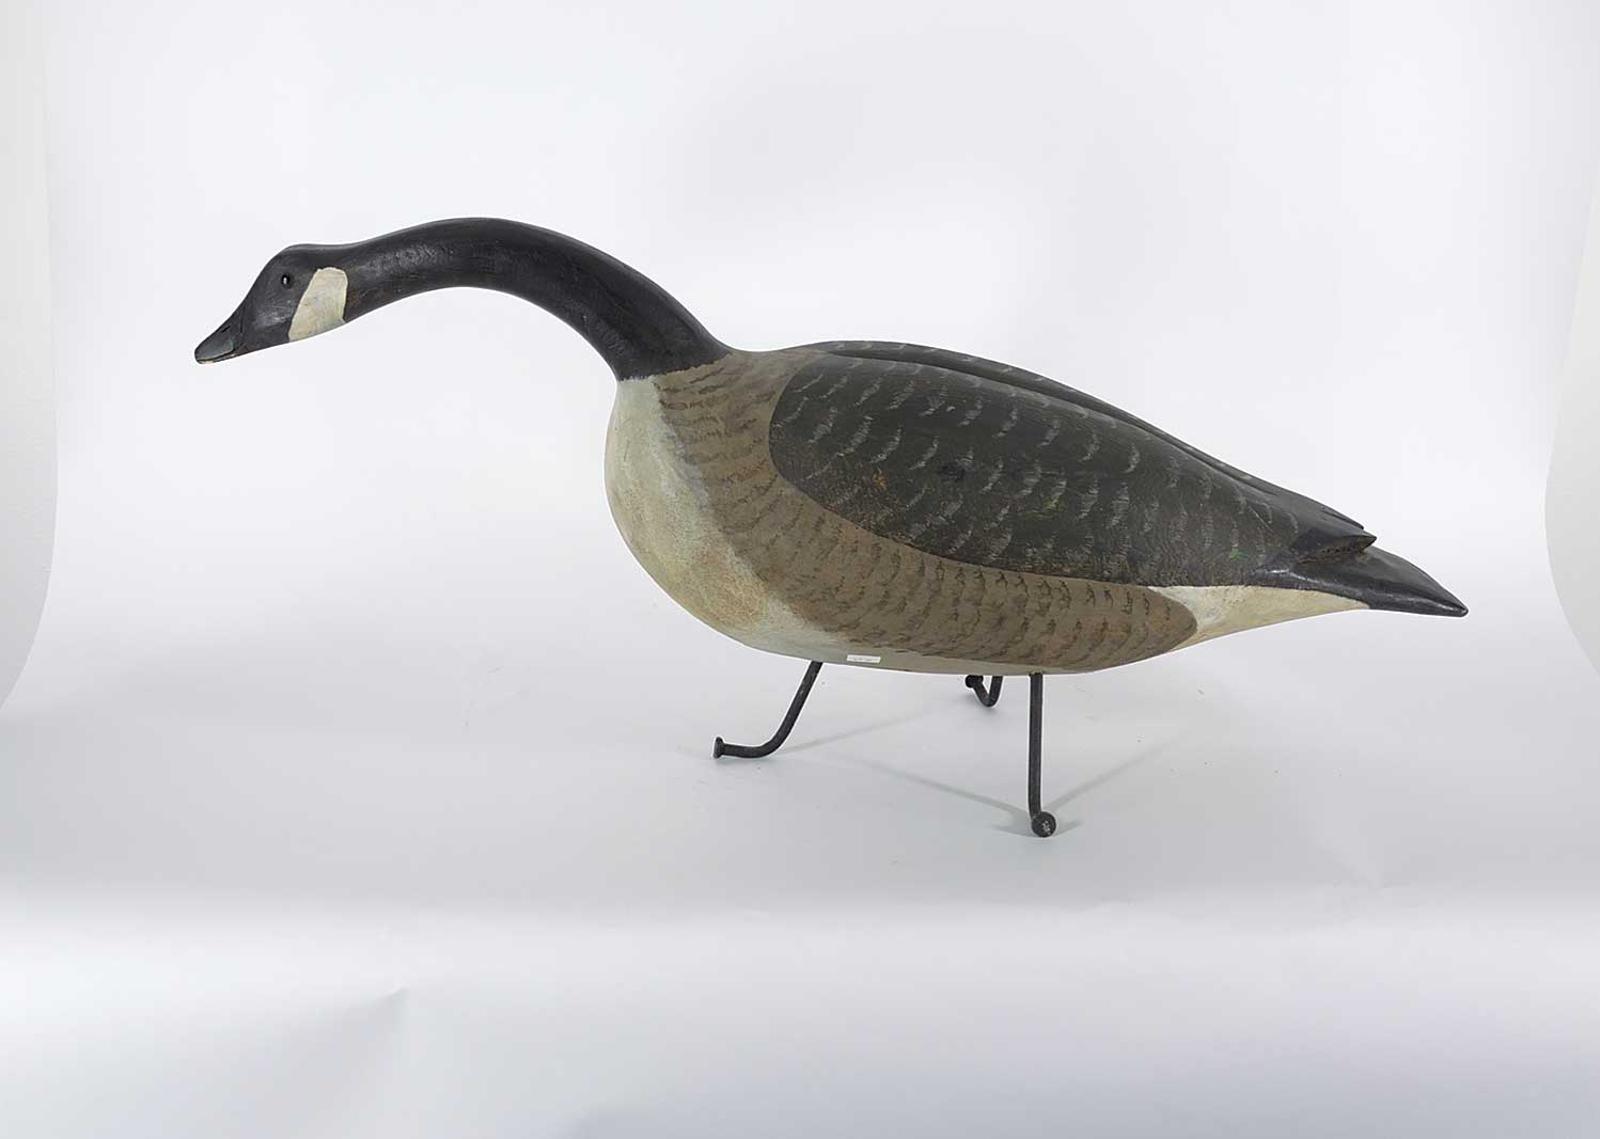 C. Woodington - Untitled - Canadian Goose with Three Legs